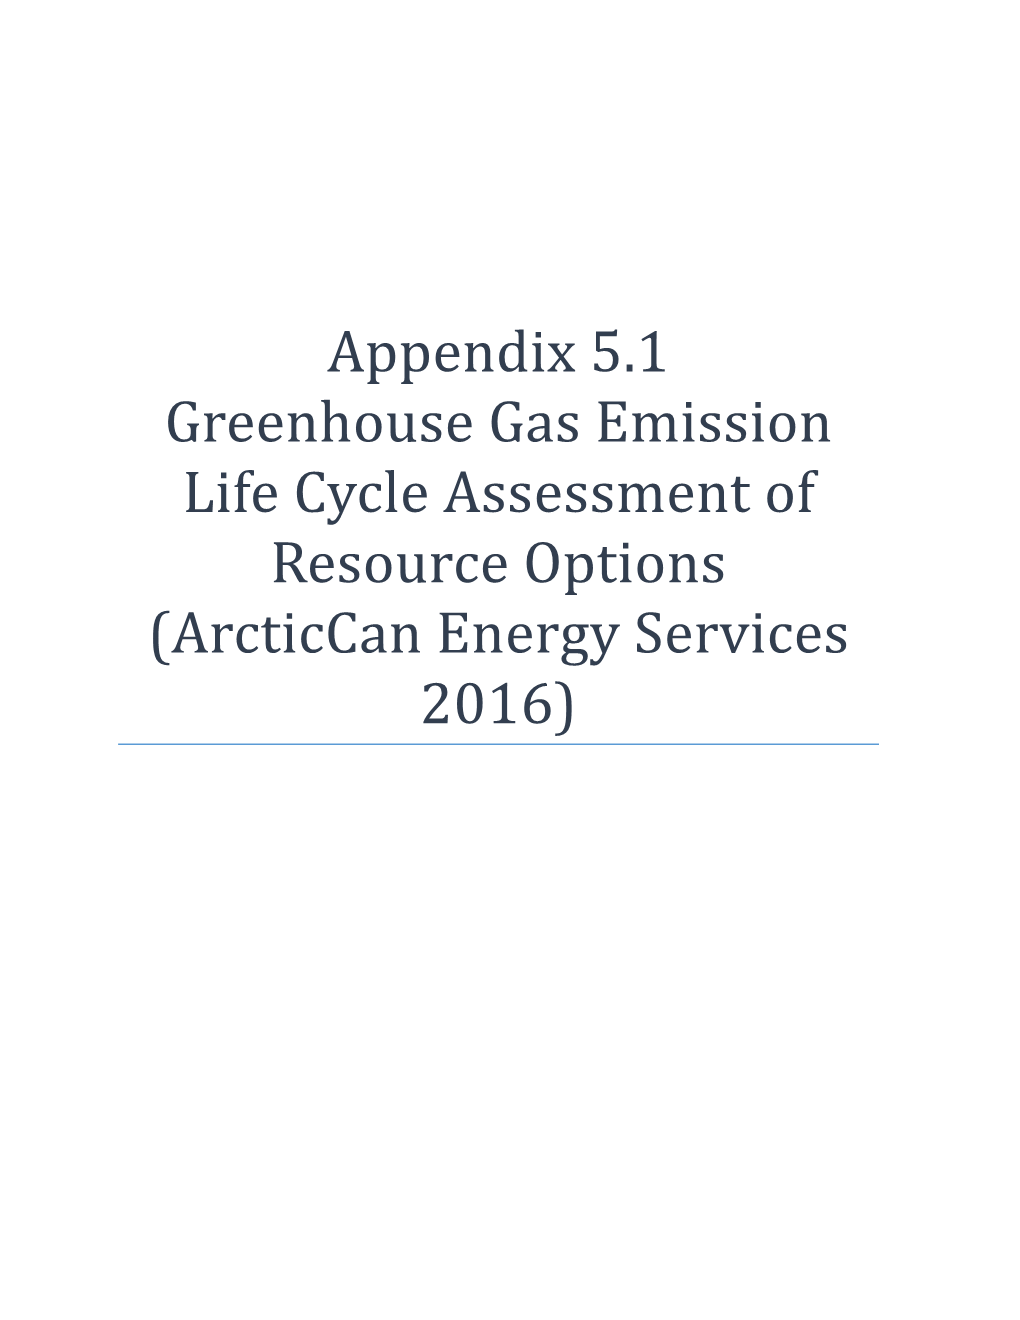 Appendix 5.1: GHG Emission Life Cycle Assessment